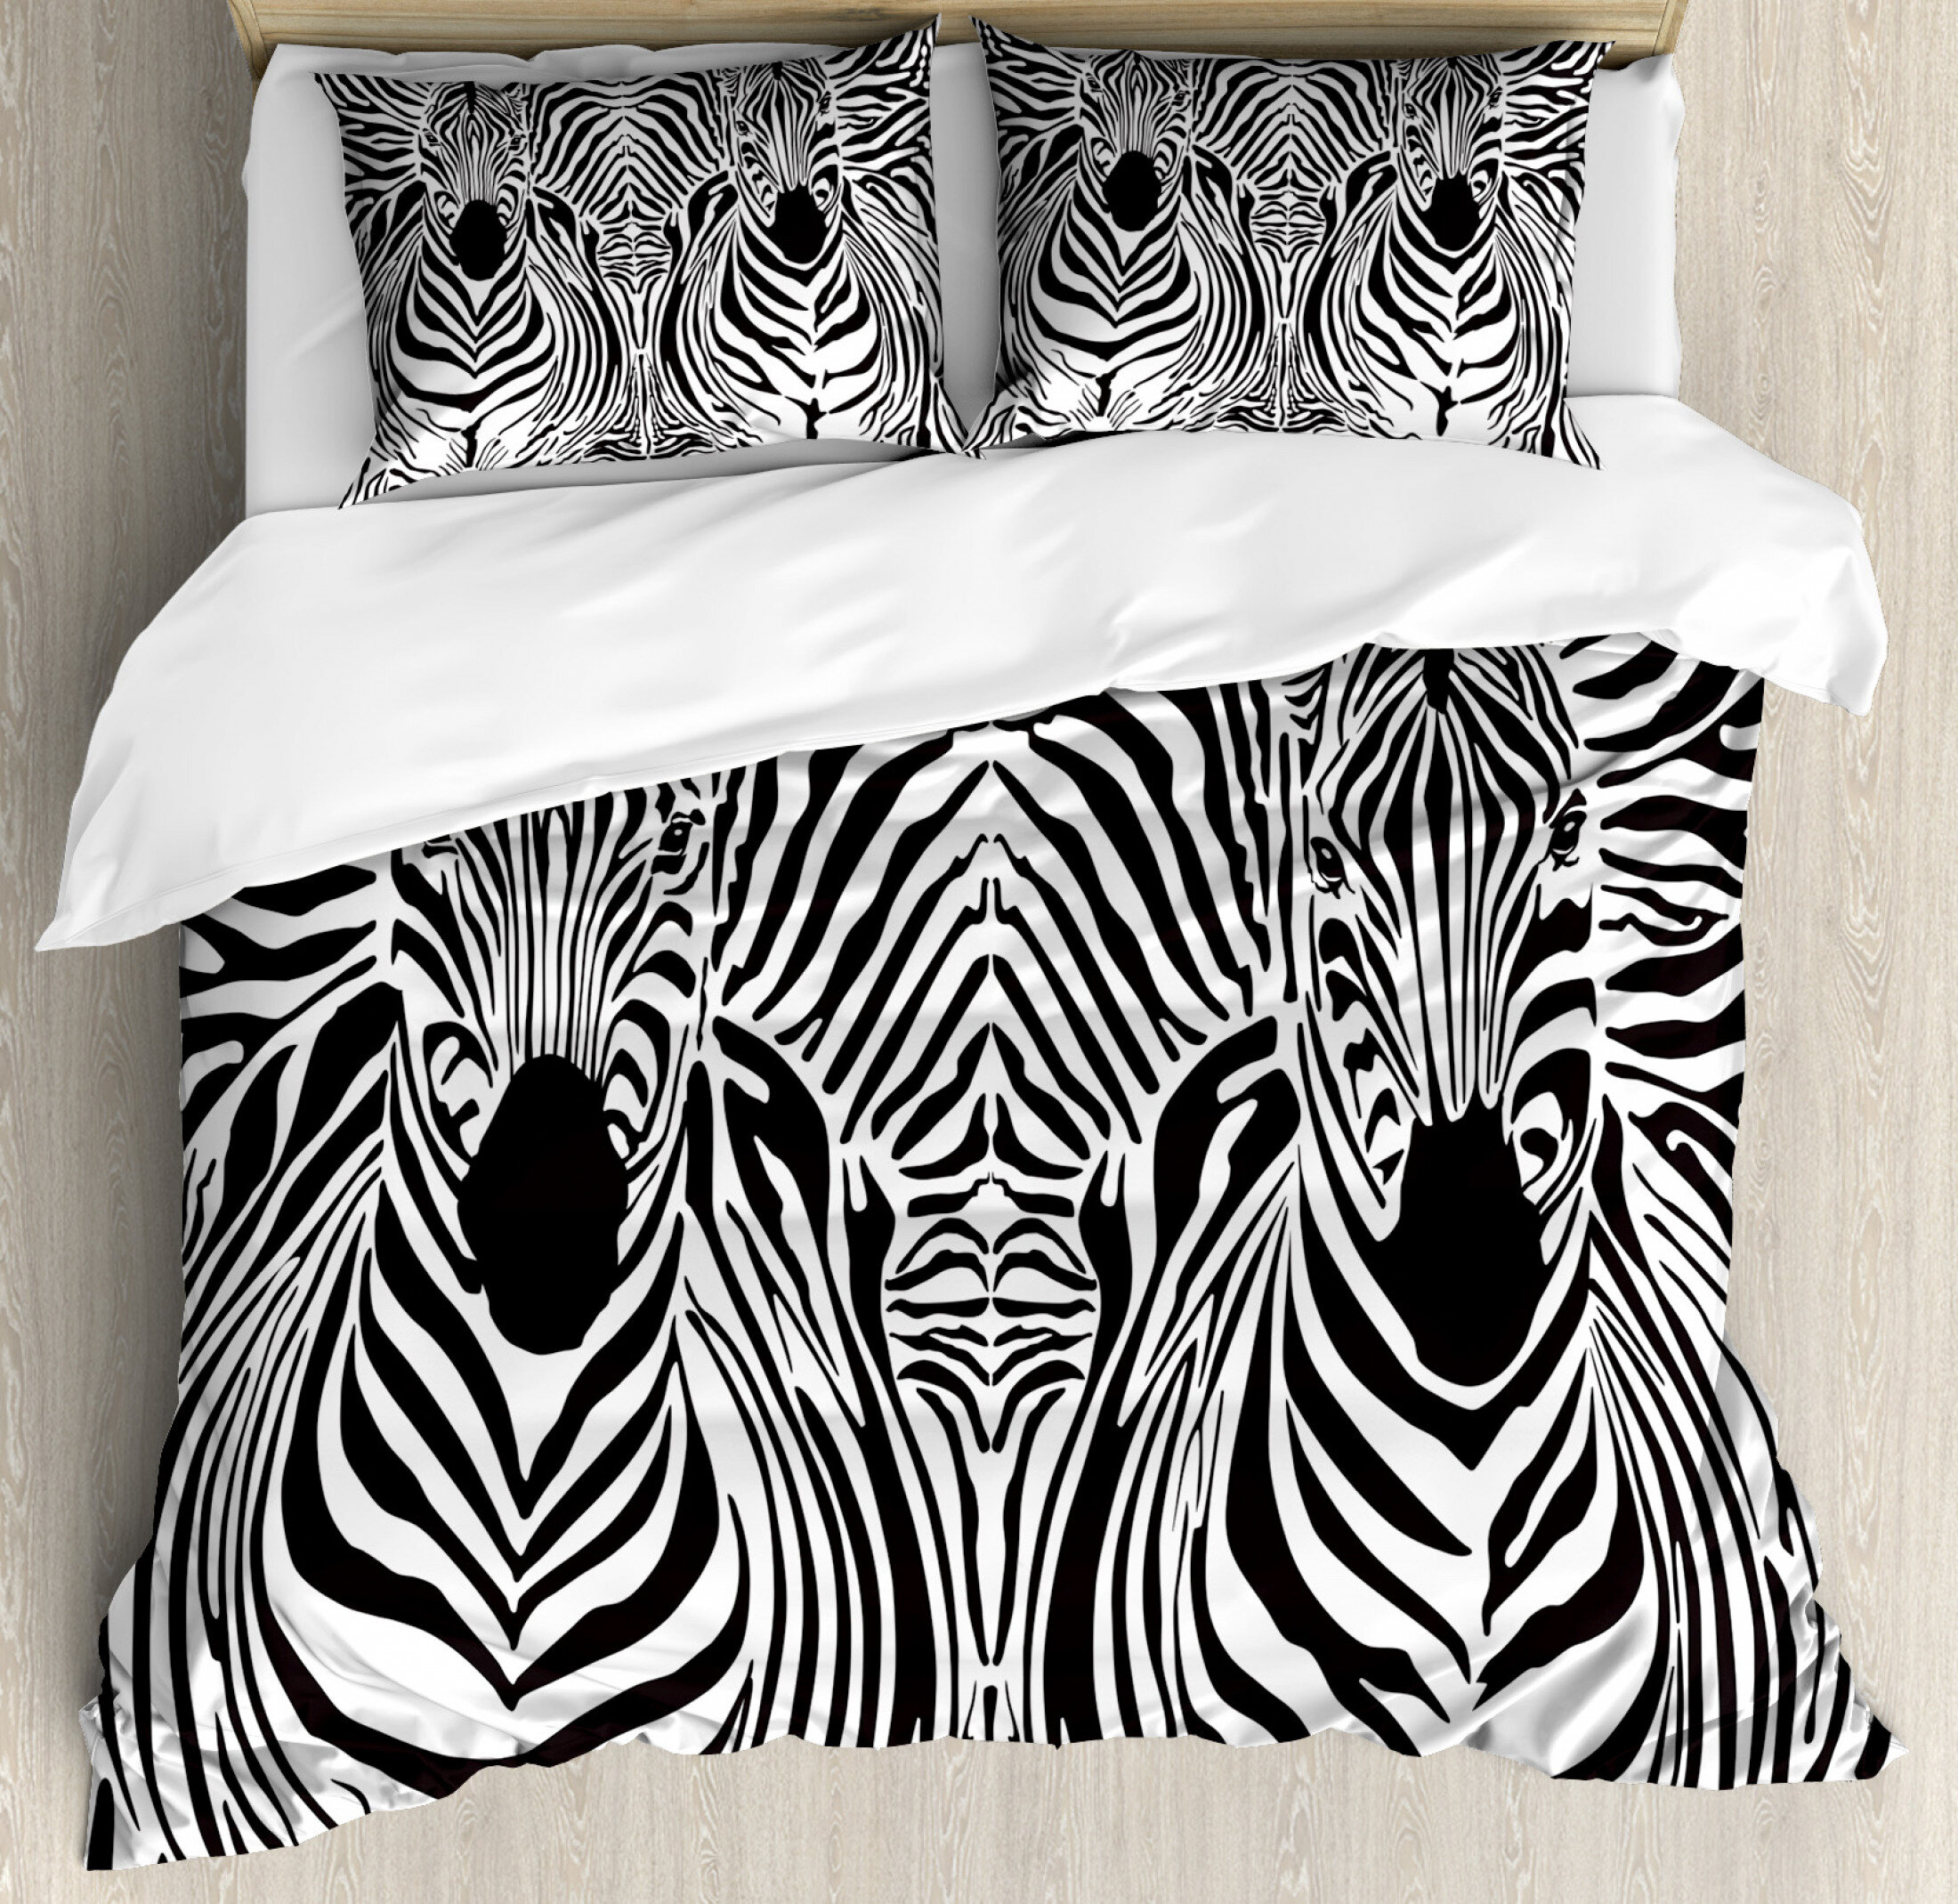 East Urban Home Zebra Print Duvet Cover Set Wayfair